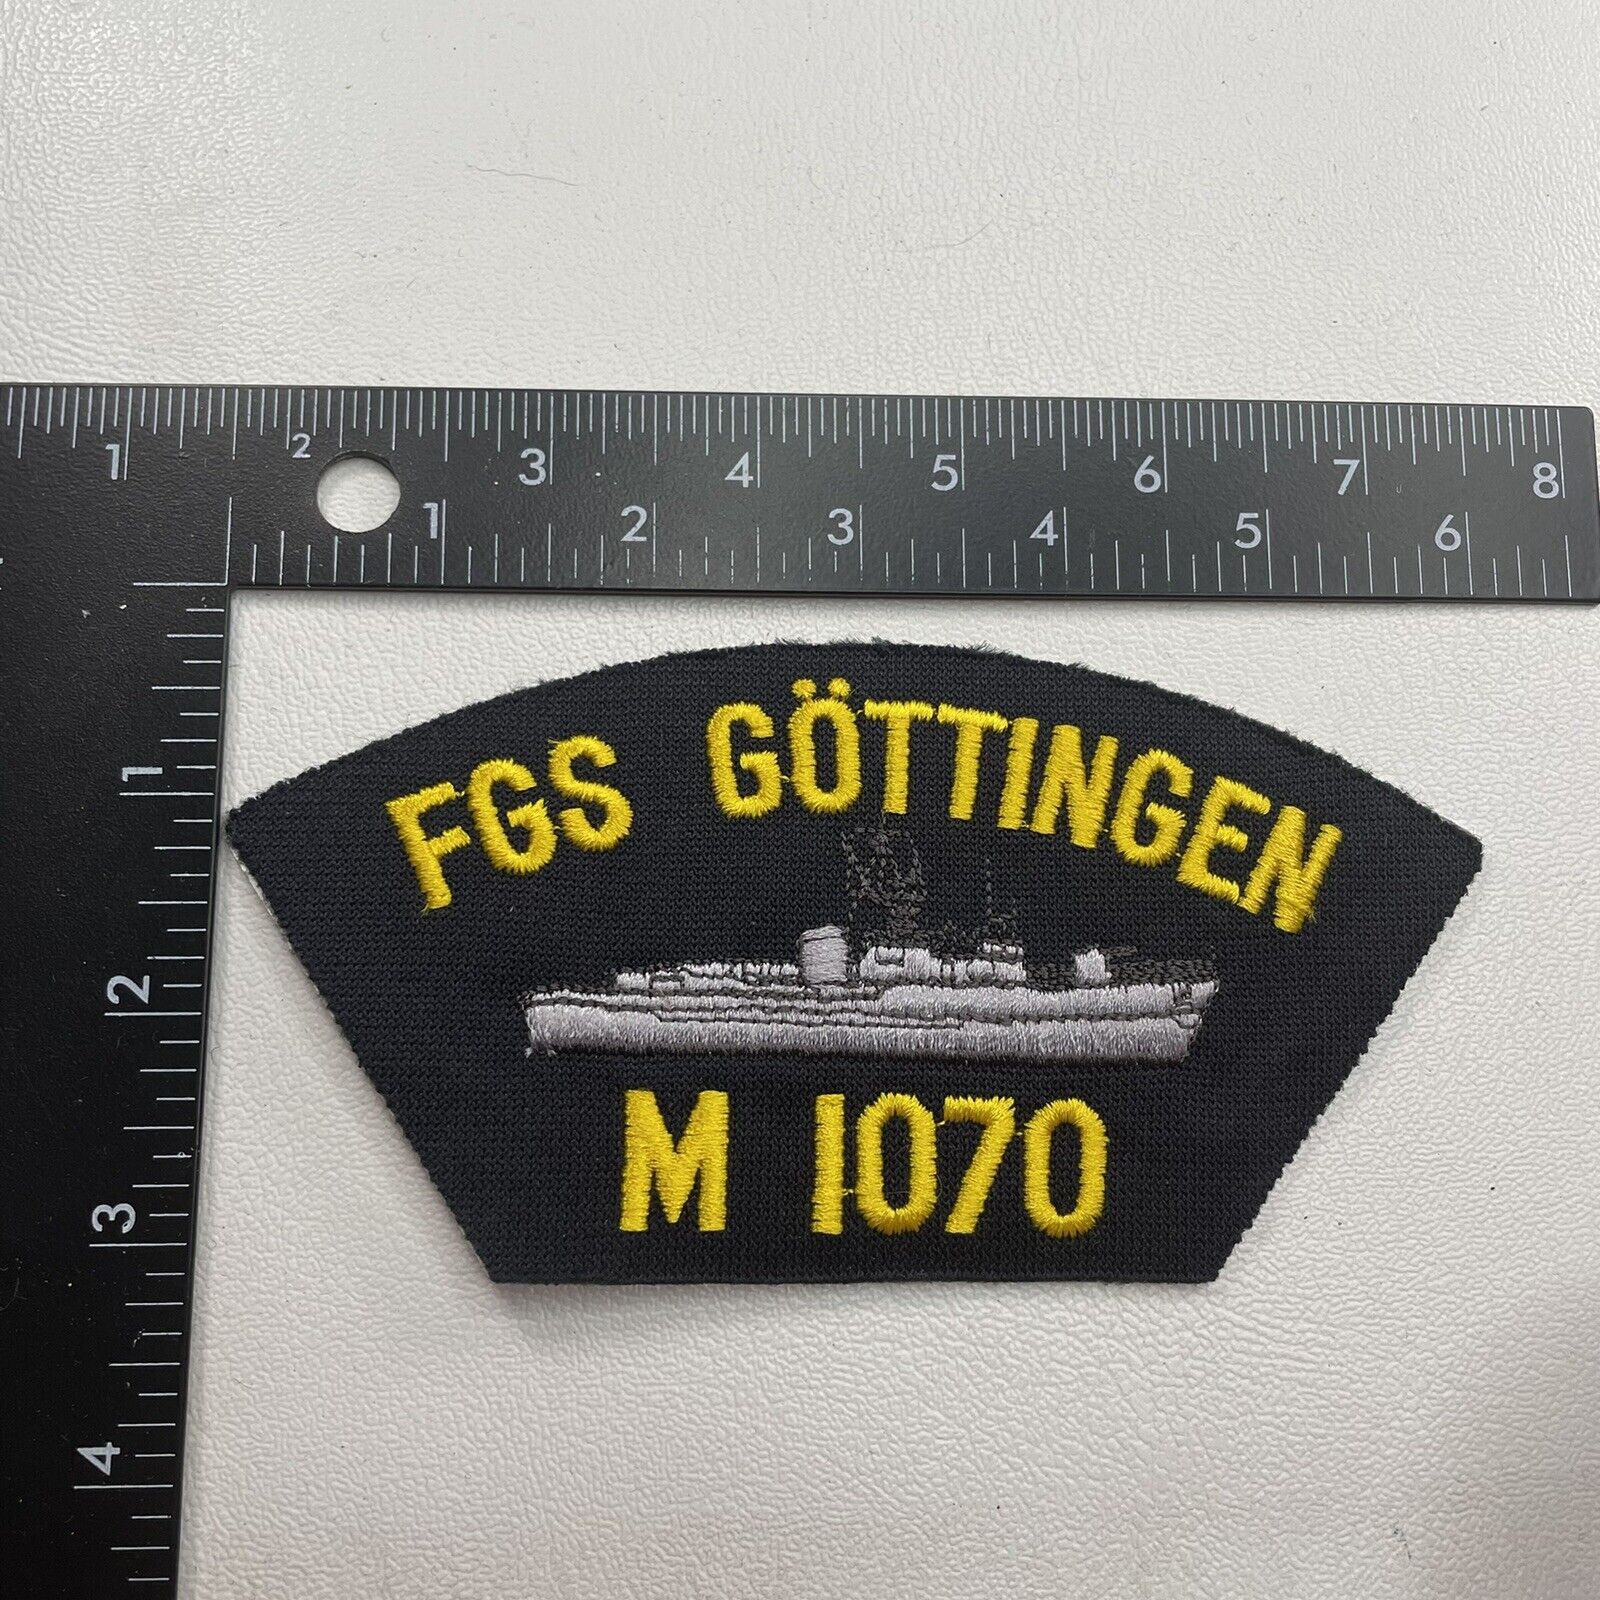 Navy Borderless Hat Patch FGS GÖTTINGEN M 1070 (Germany Maybe ?) 26TU